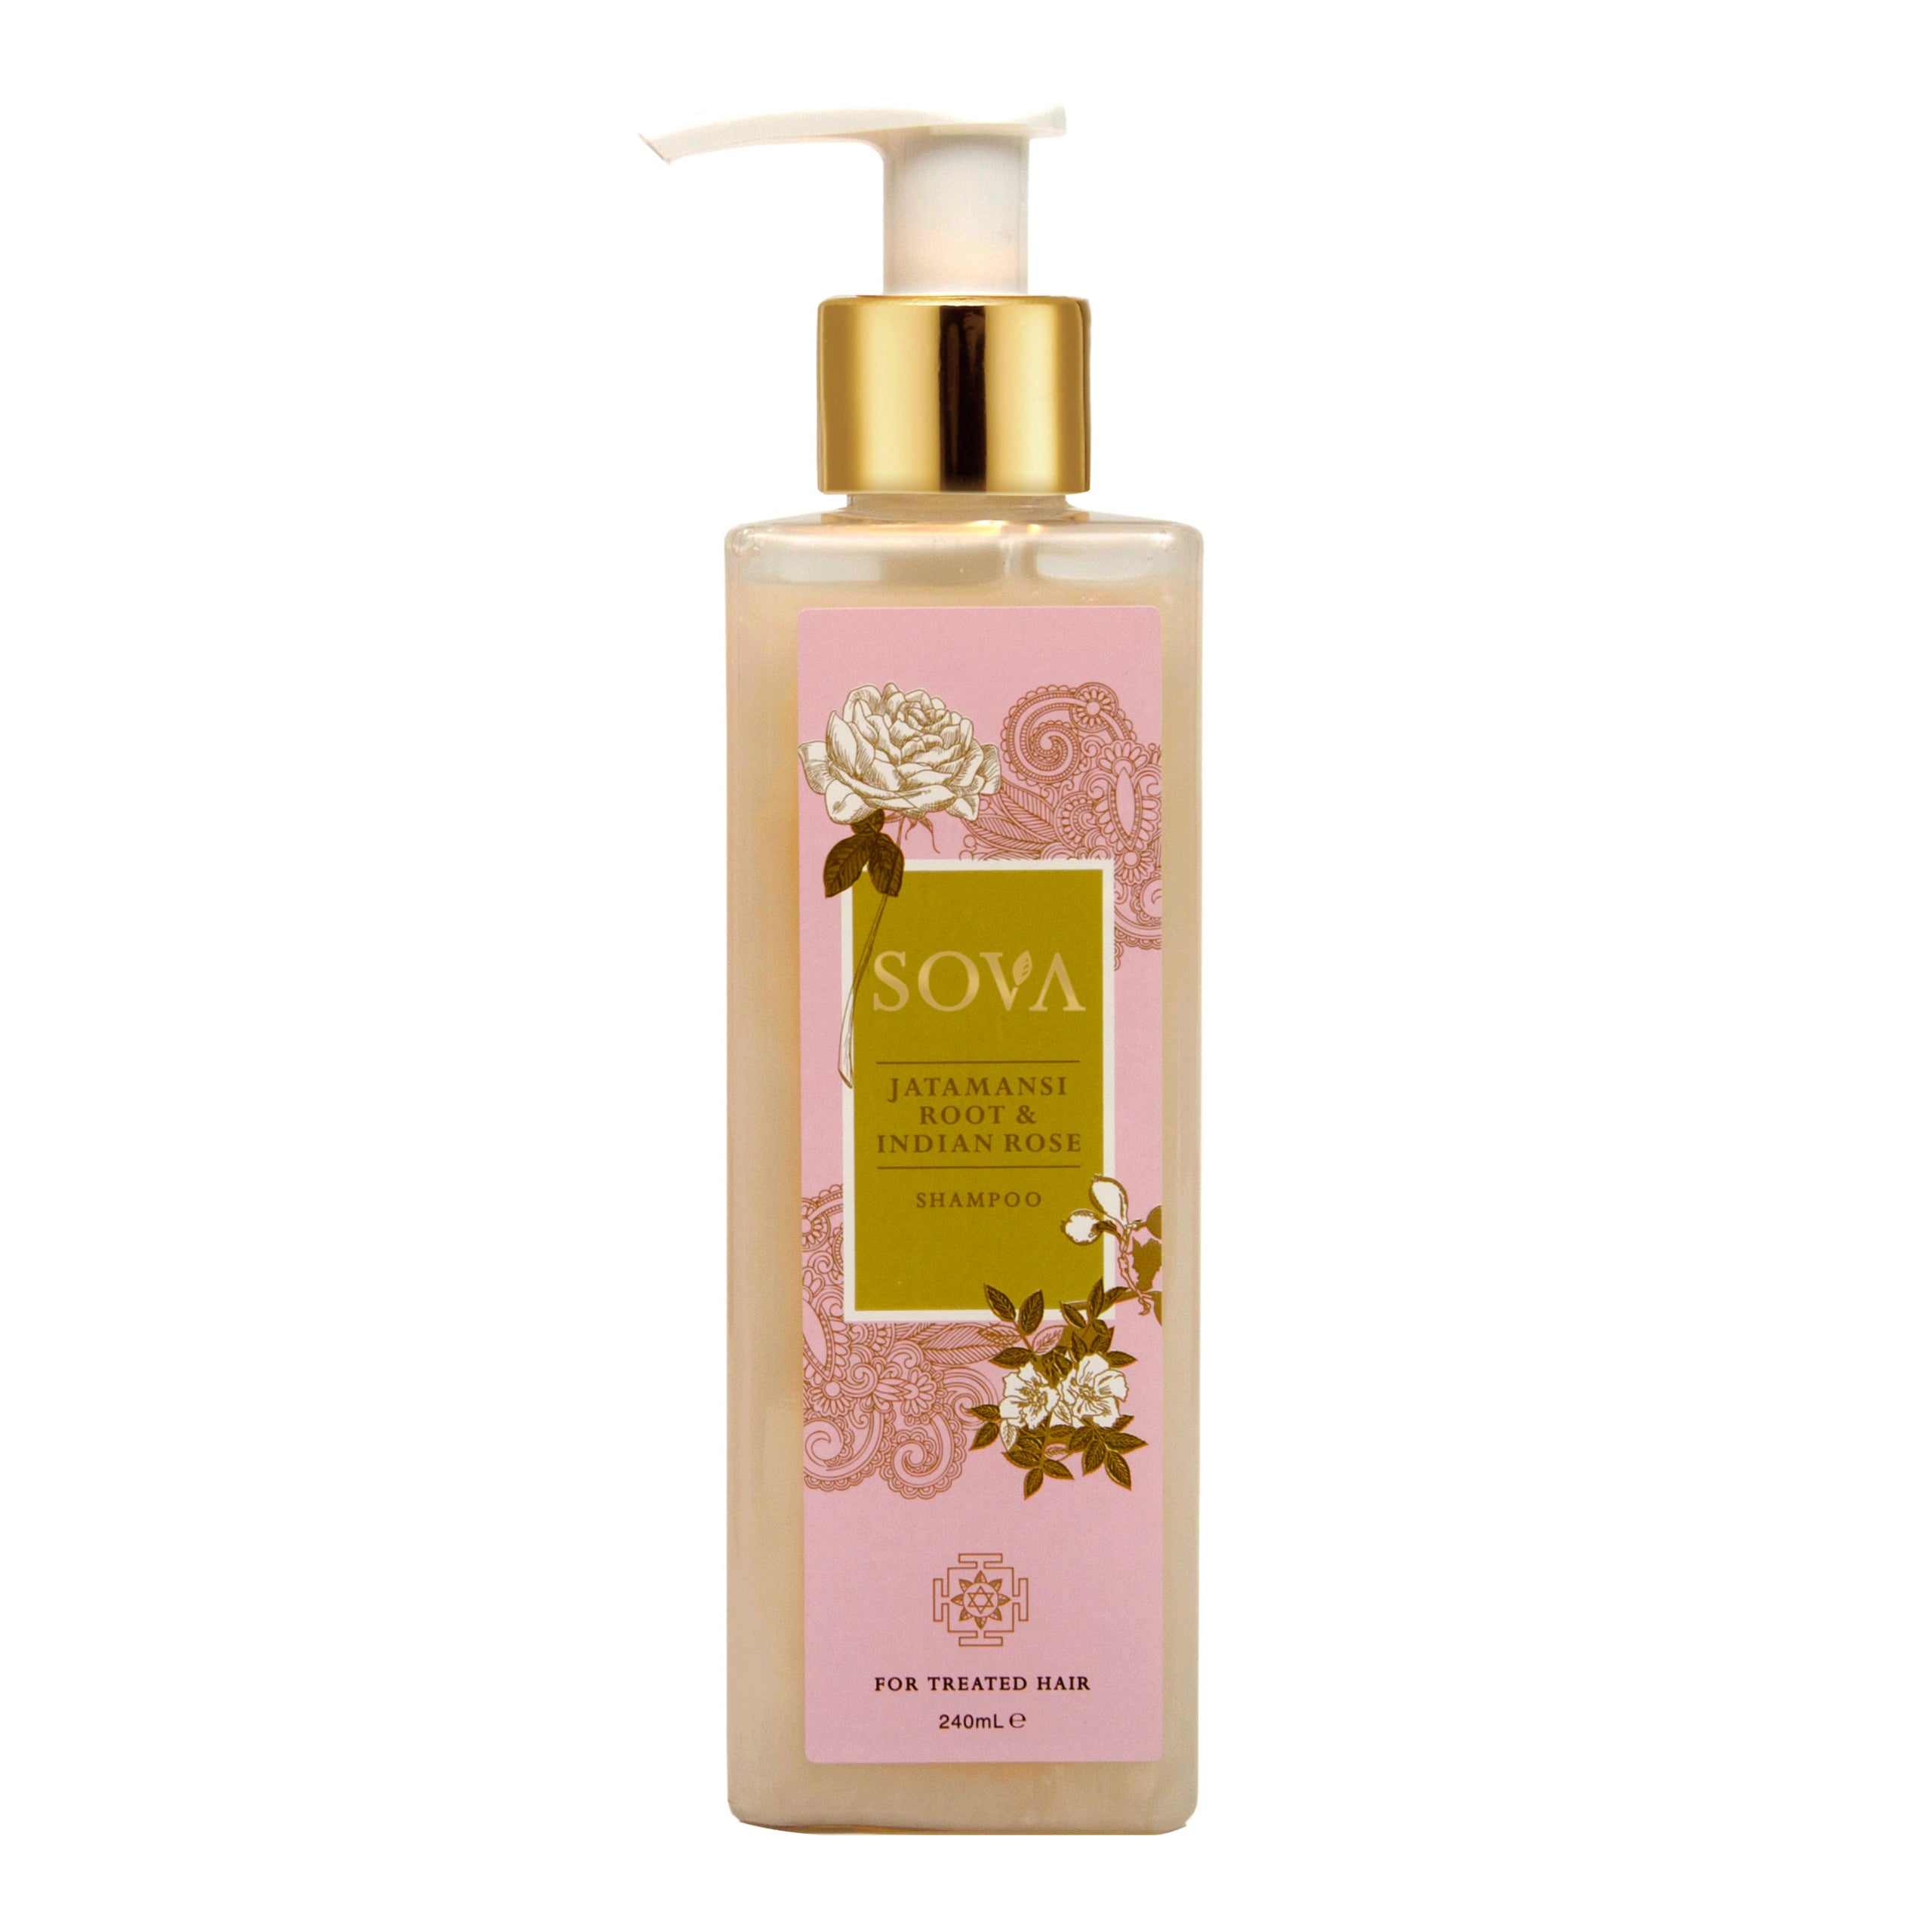 Sovva Jatamansi Root X Indian Rose Shampoo For Treated Hair 240 ml